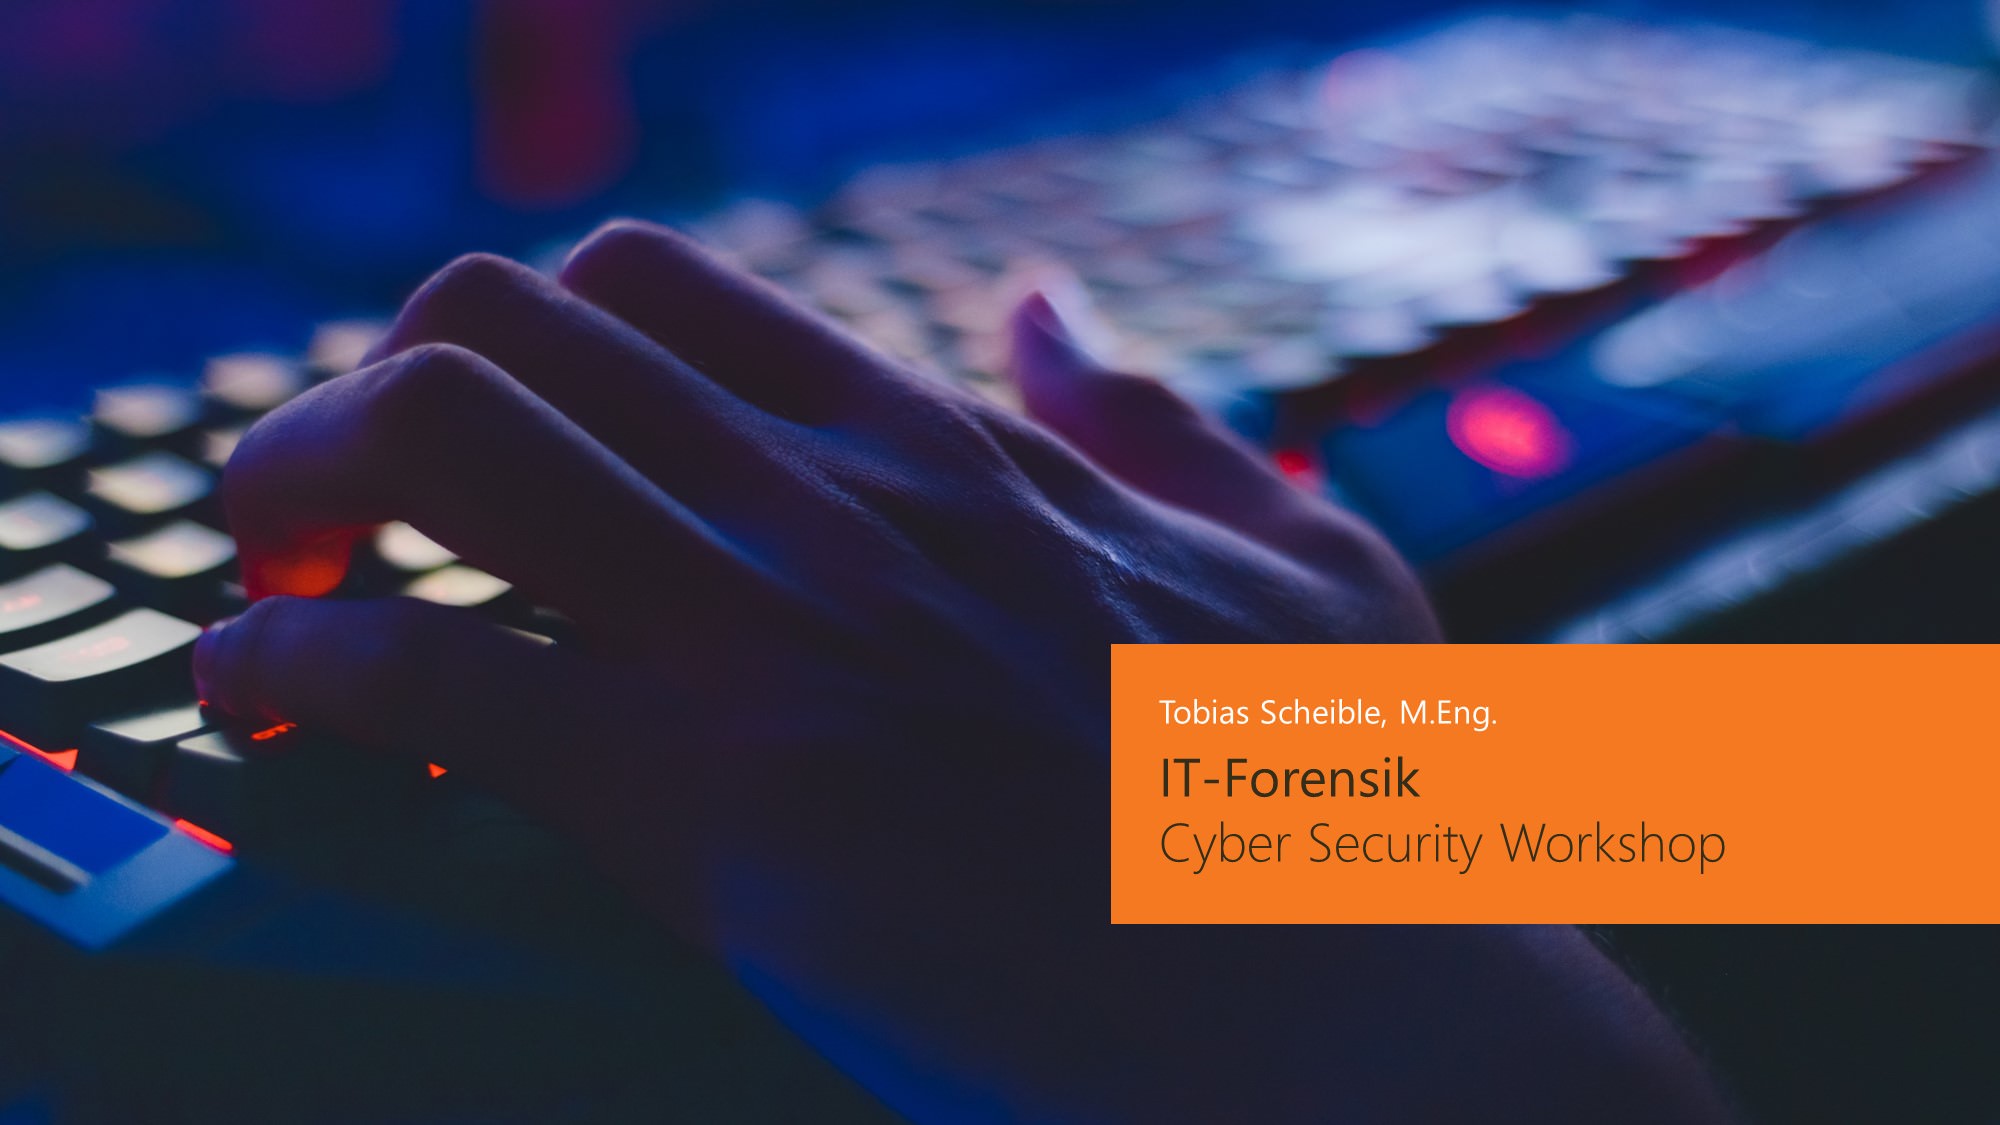 IT-Forensik - Cyber Security Workshop